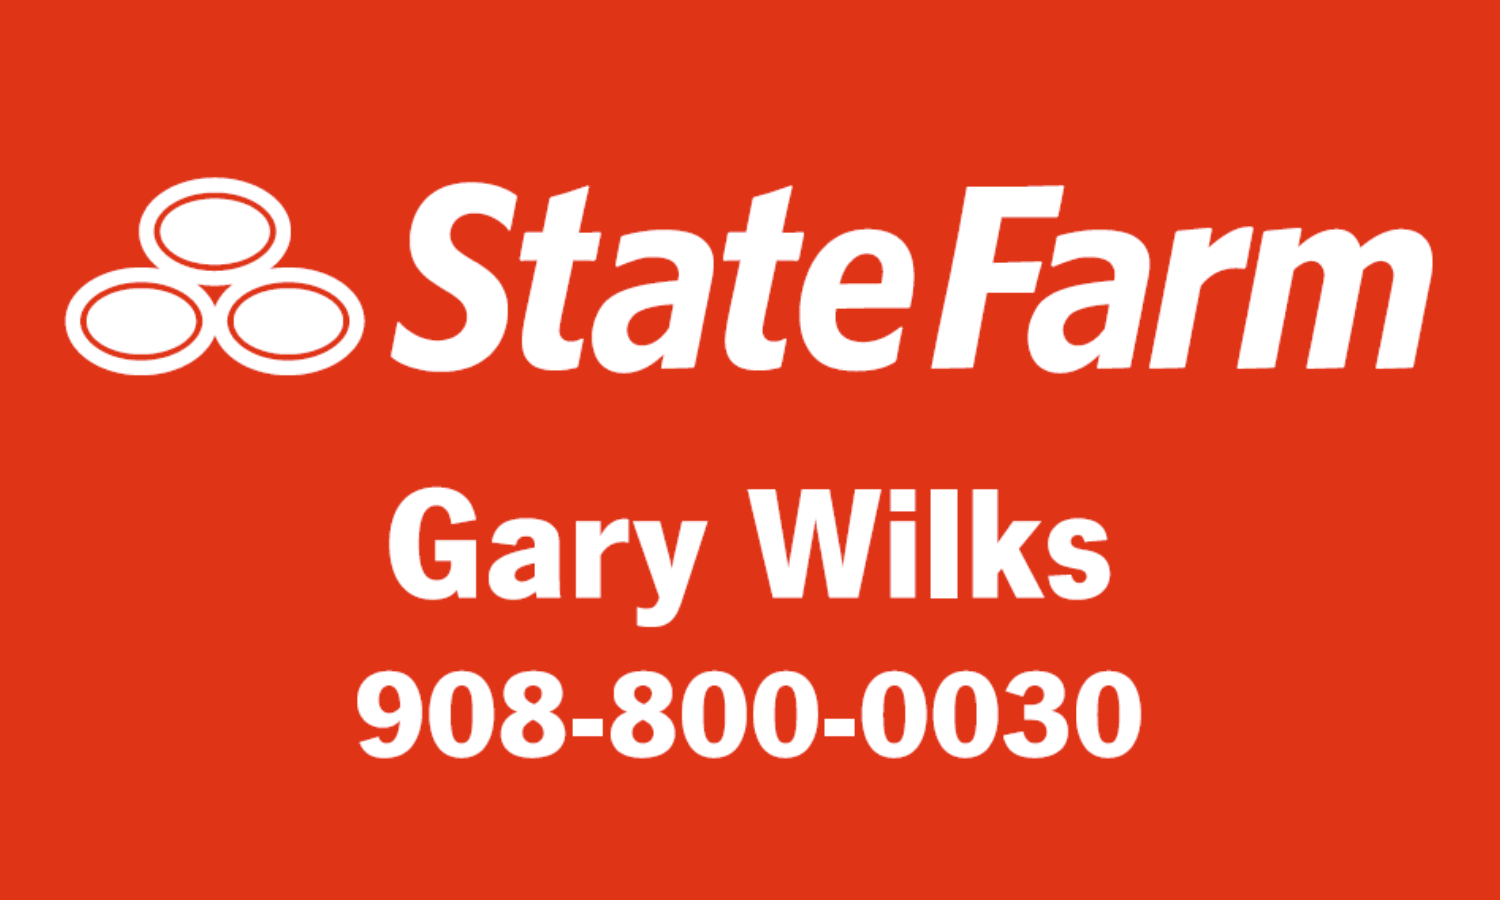 State Farm: Gary Wilks